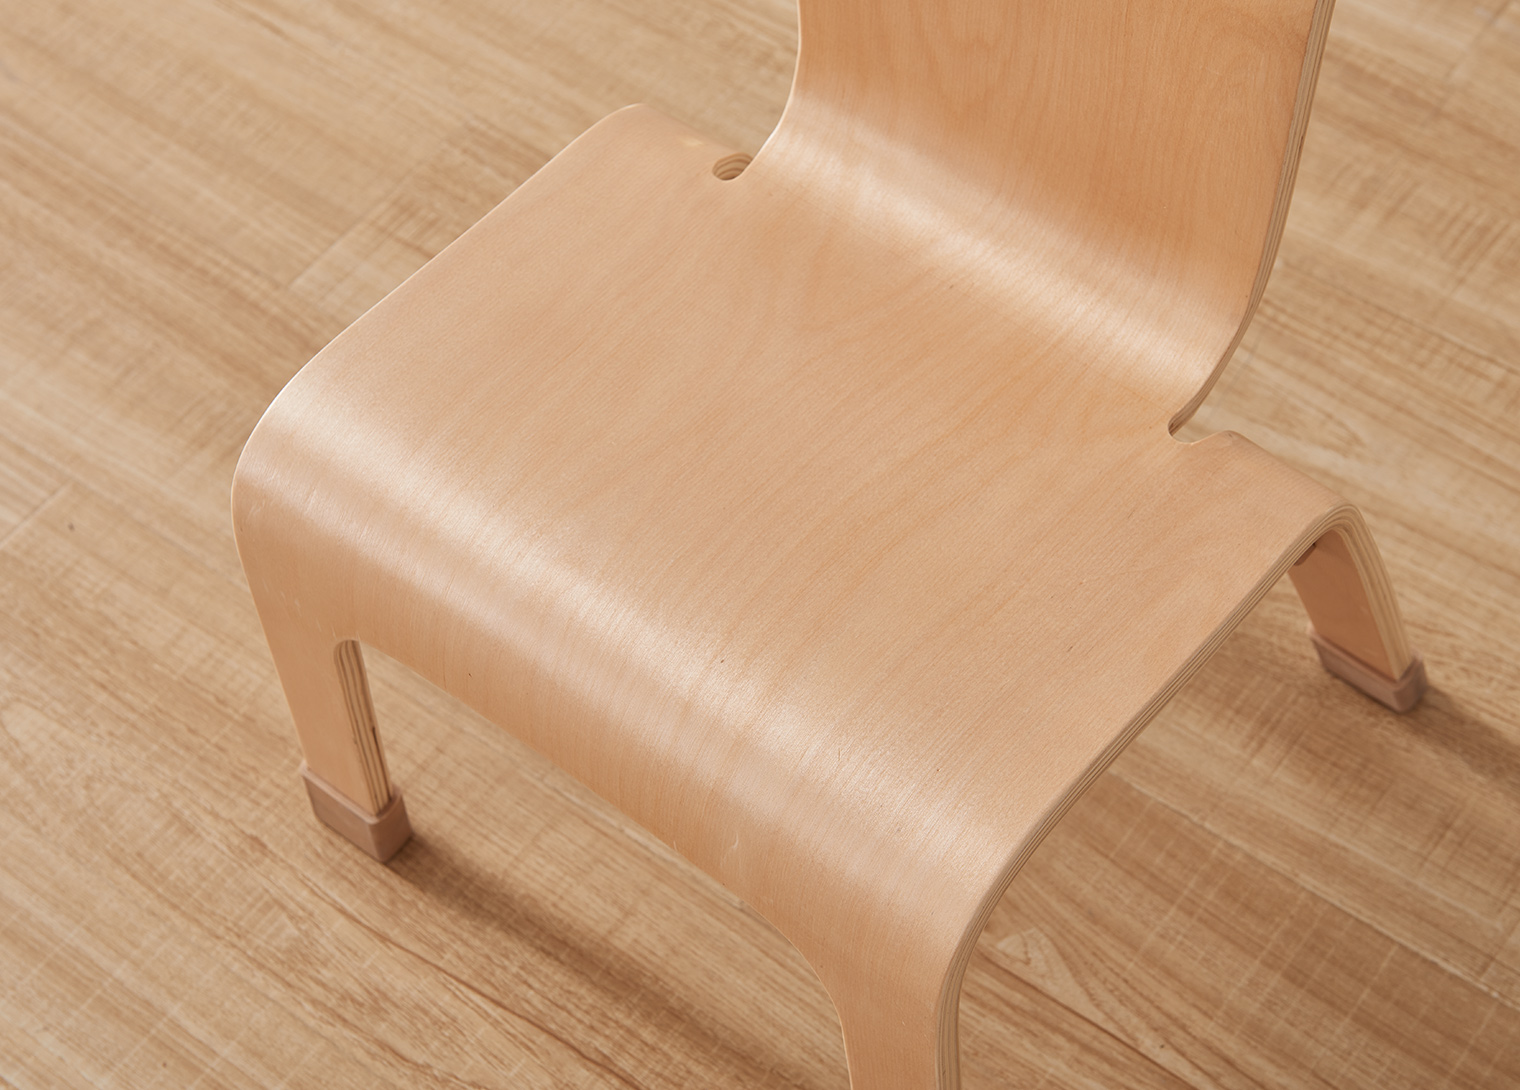 260H Green wood Chair